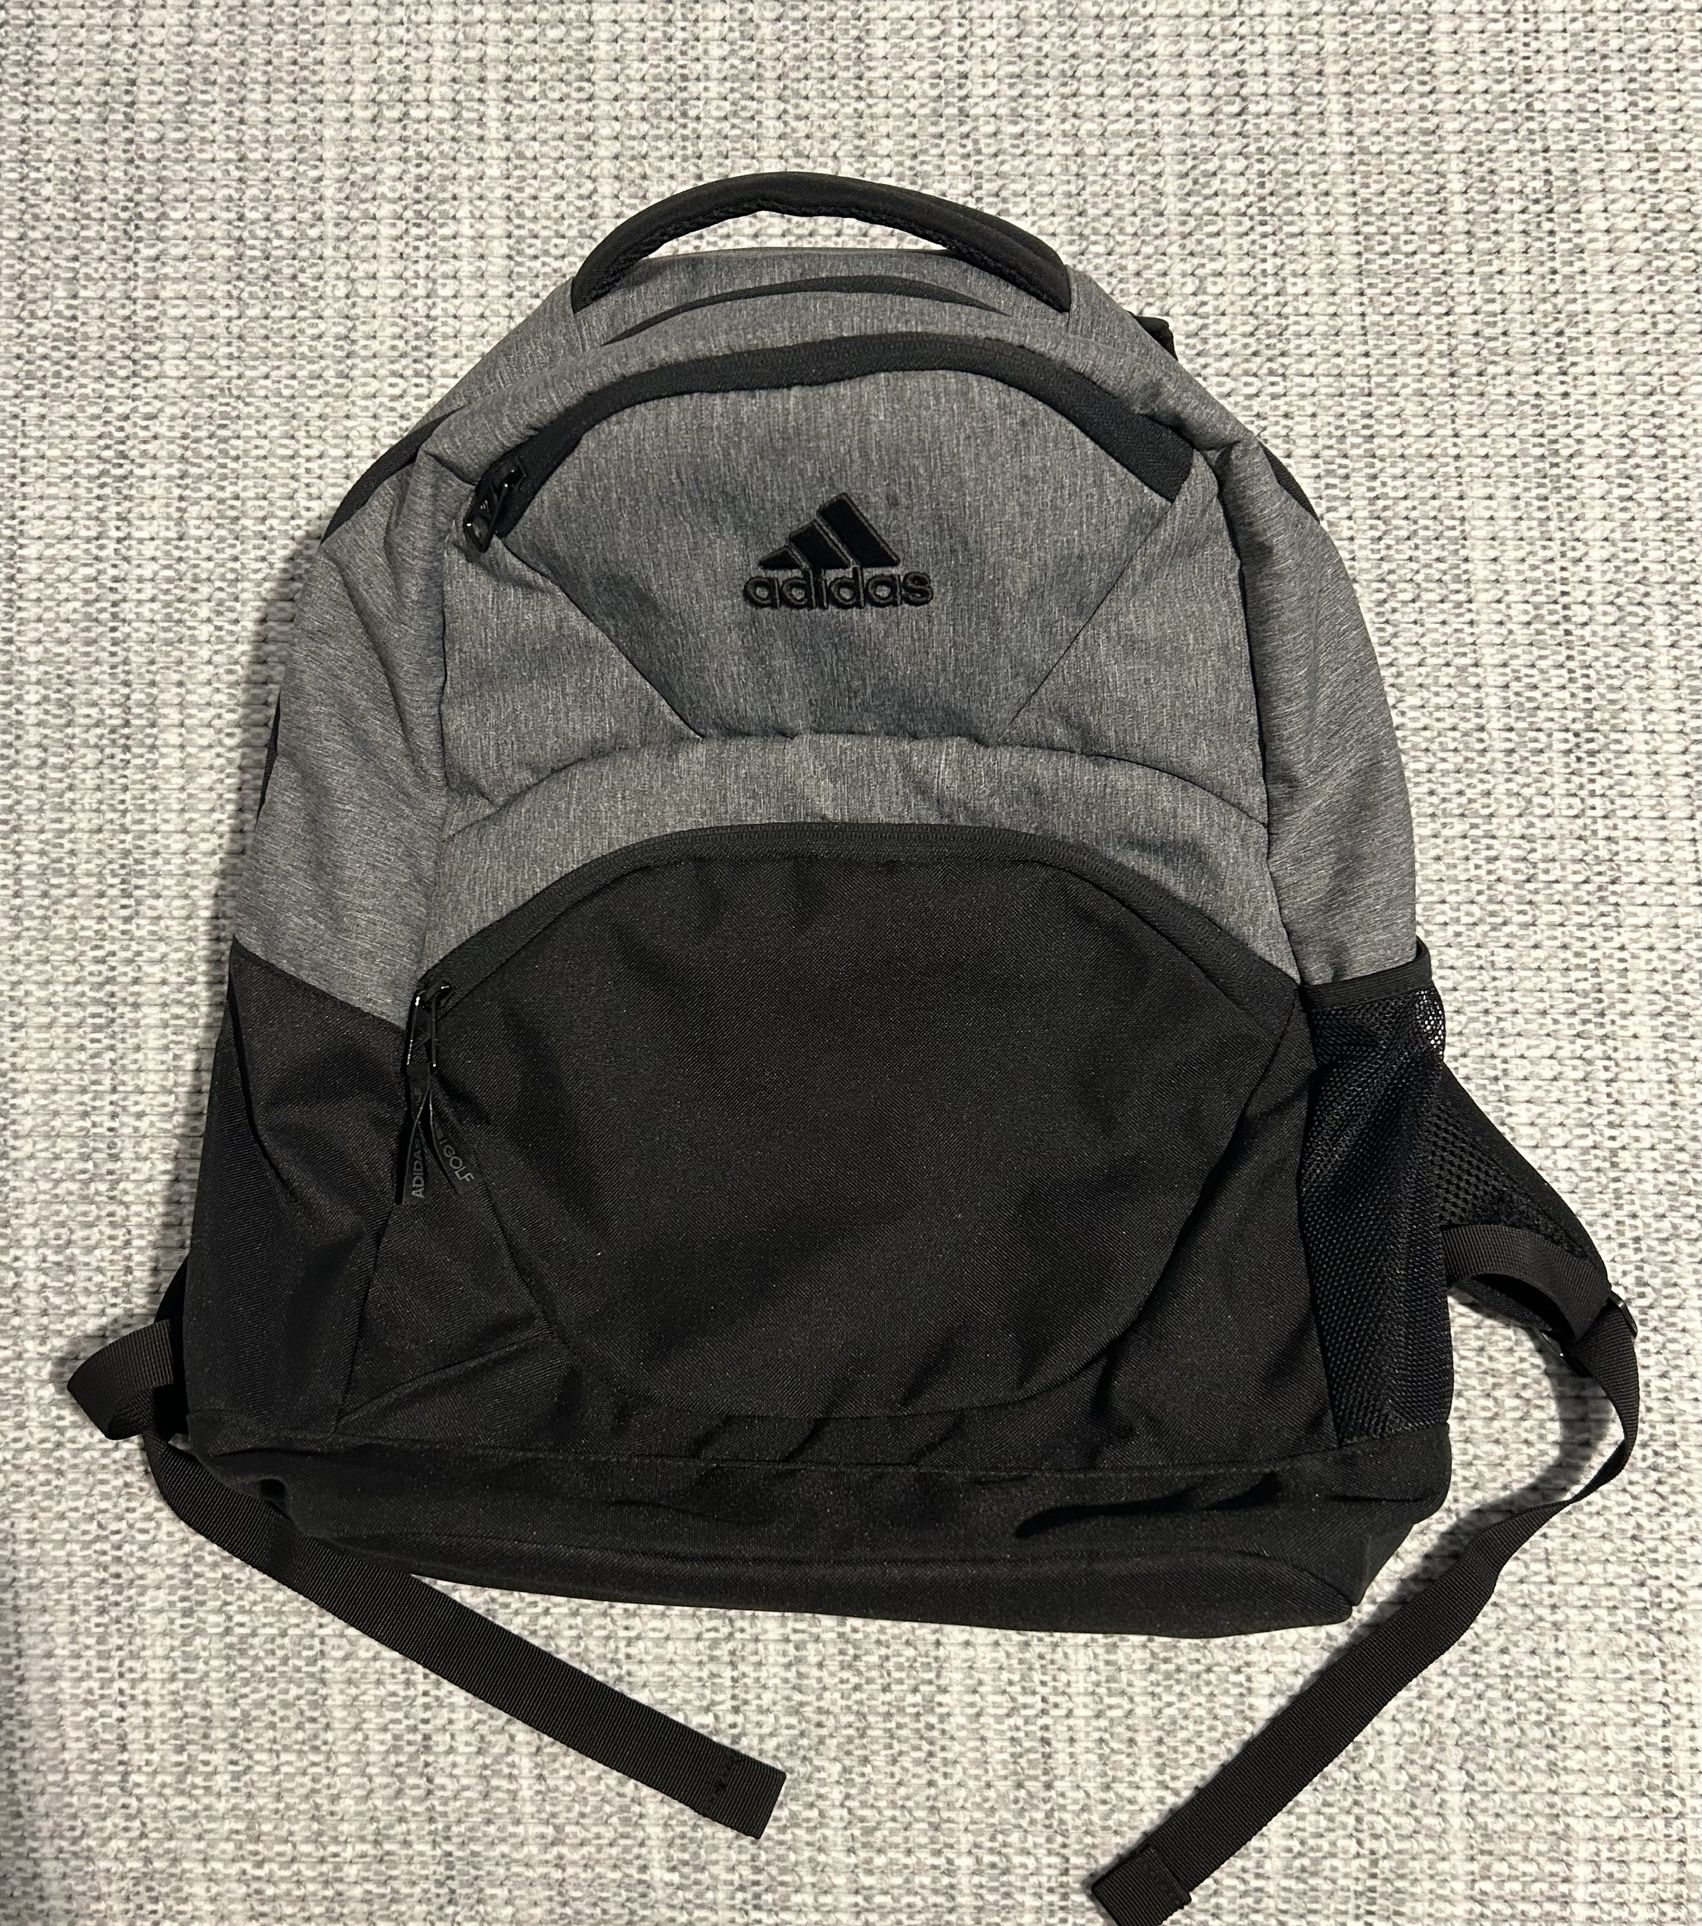 Adidas Backpack - Like New, Barely Used! 